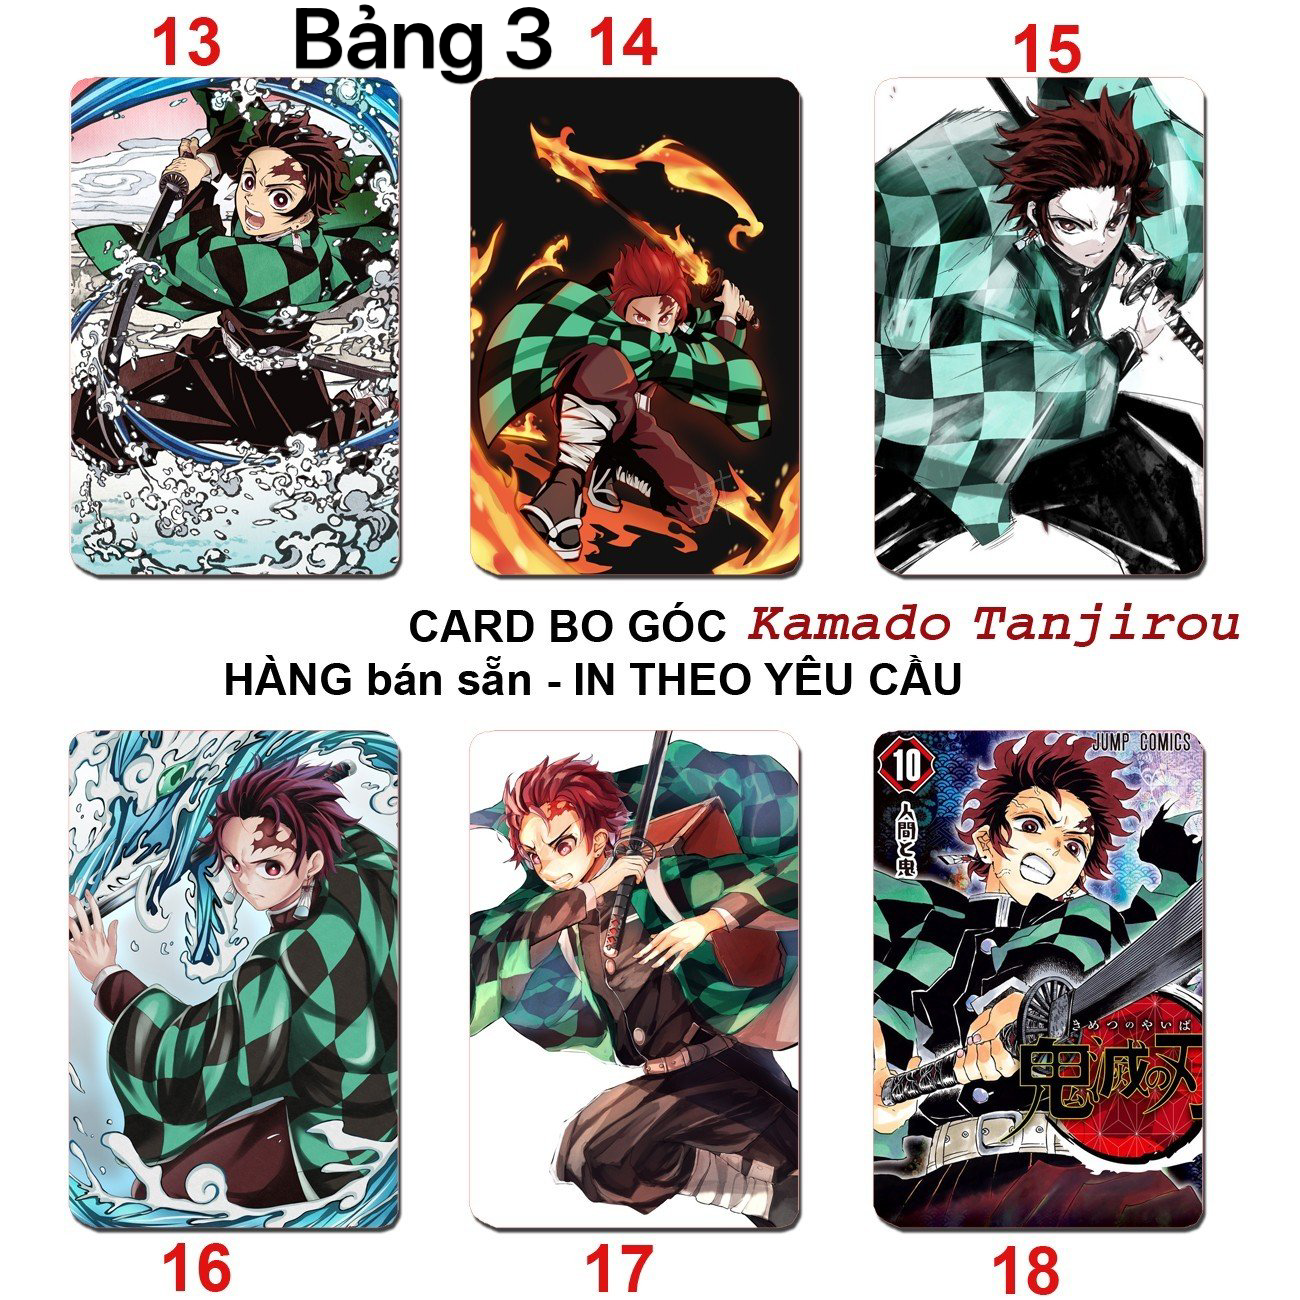 Ảnh card Tanjiro kamado 6 ảnh khác nhau/ Thẻ card hình kamado Taạniro anime kimetsu no yaiba